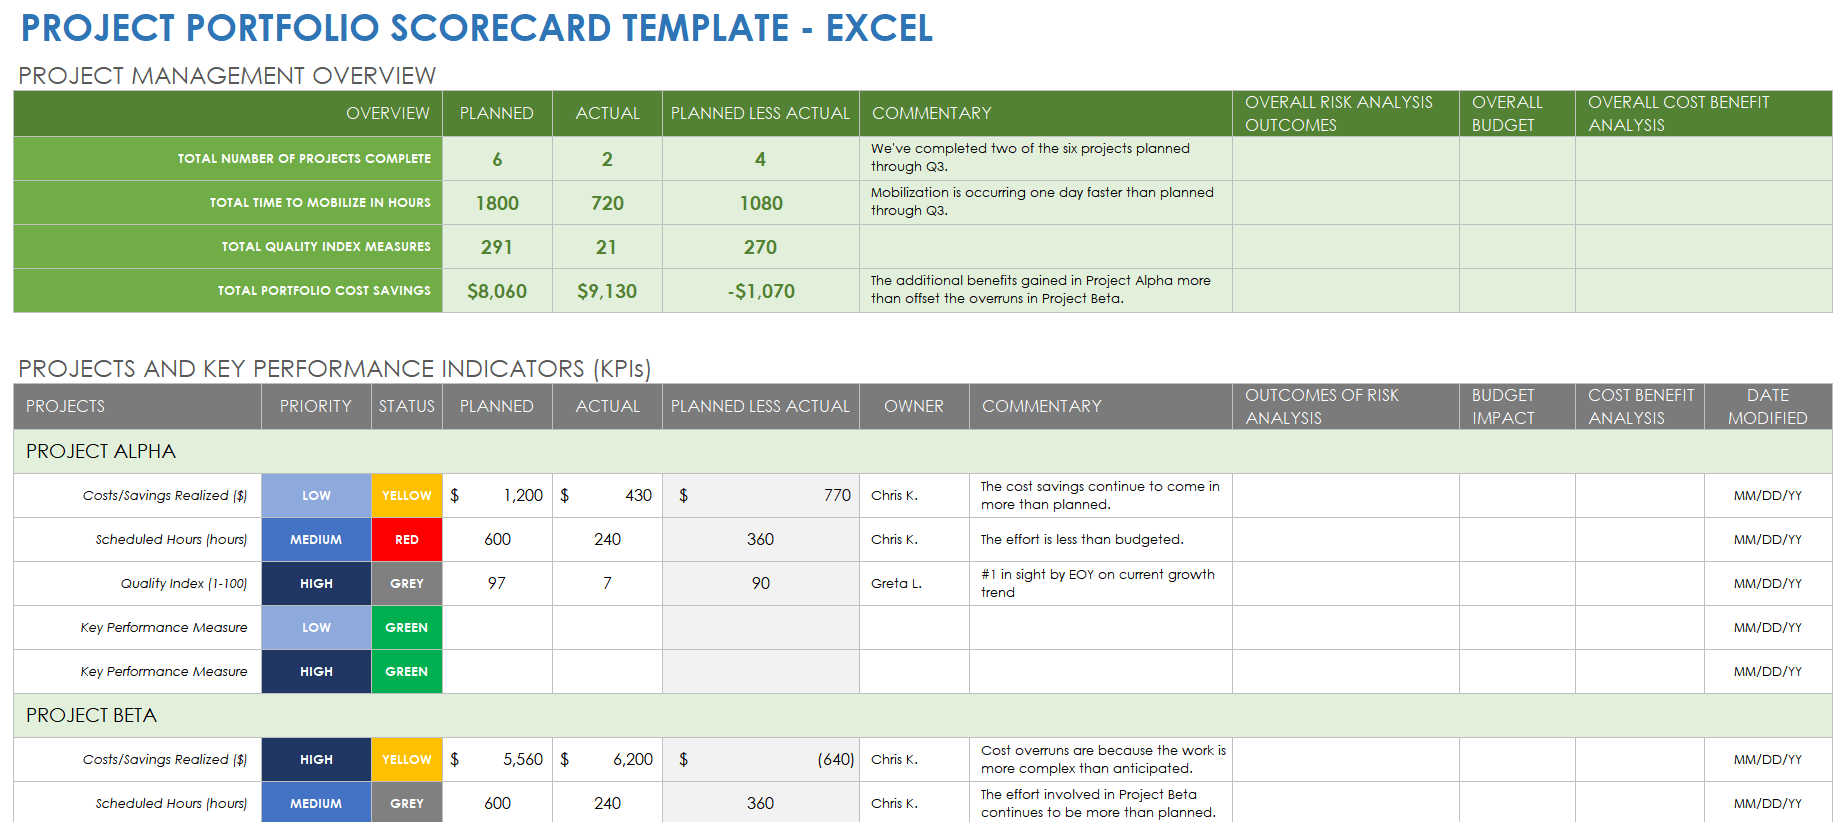 Project Portfolio Scorecard Excel Template